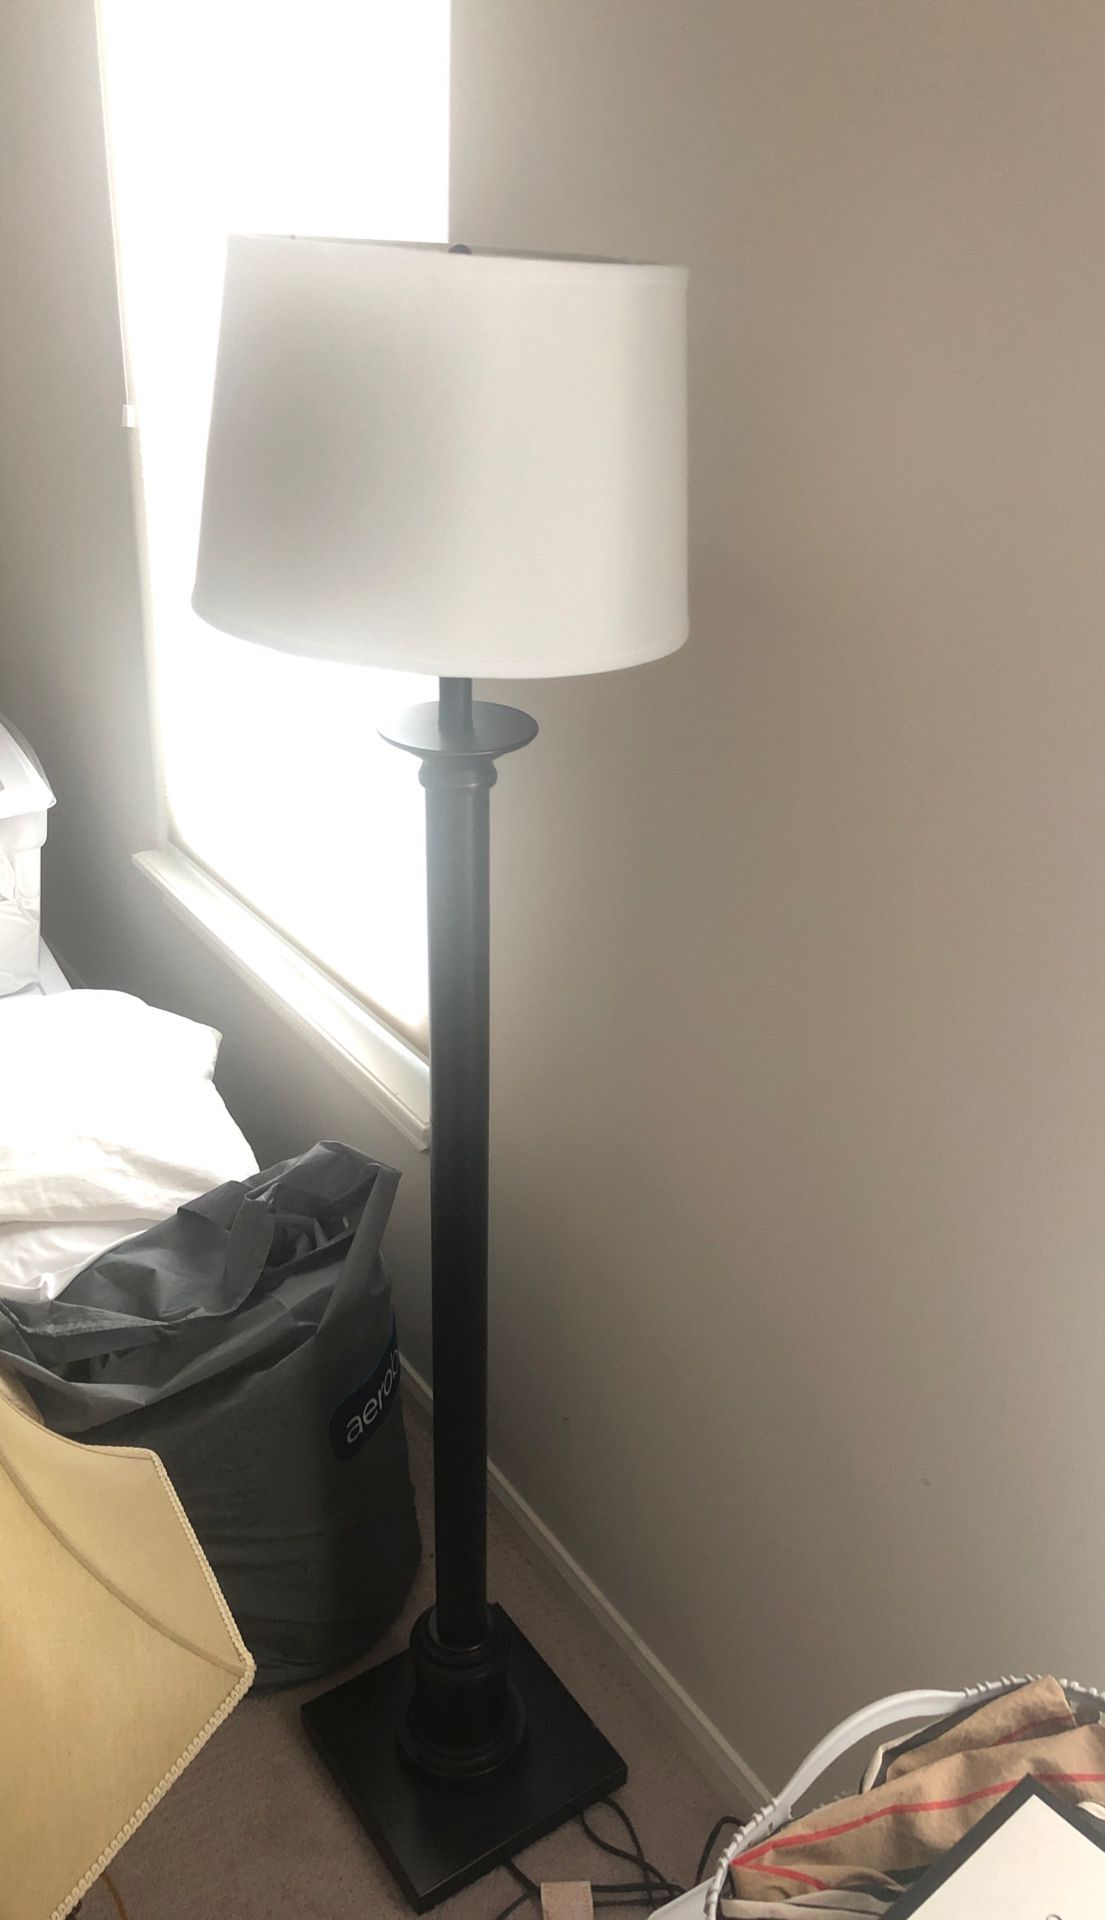 Floor lamp from Target